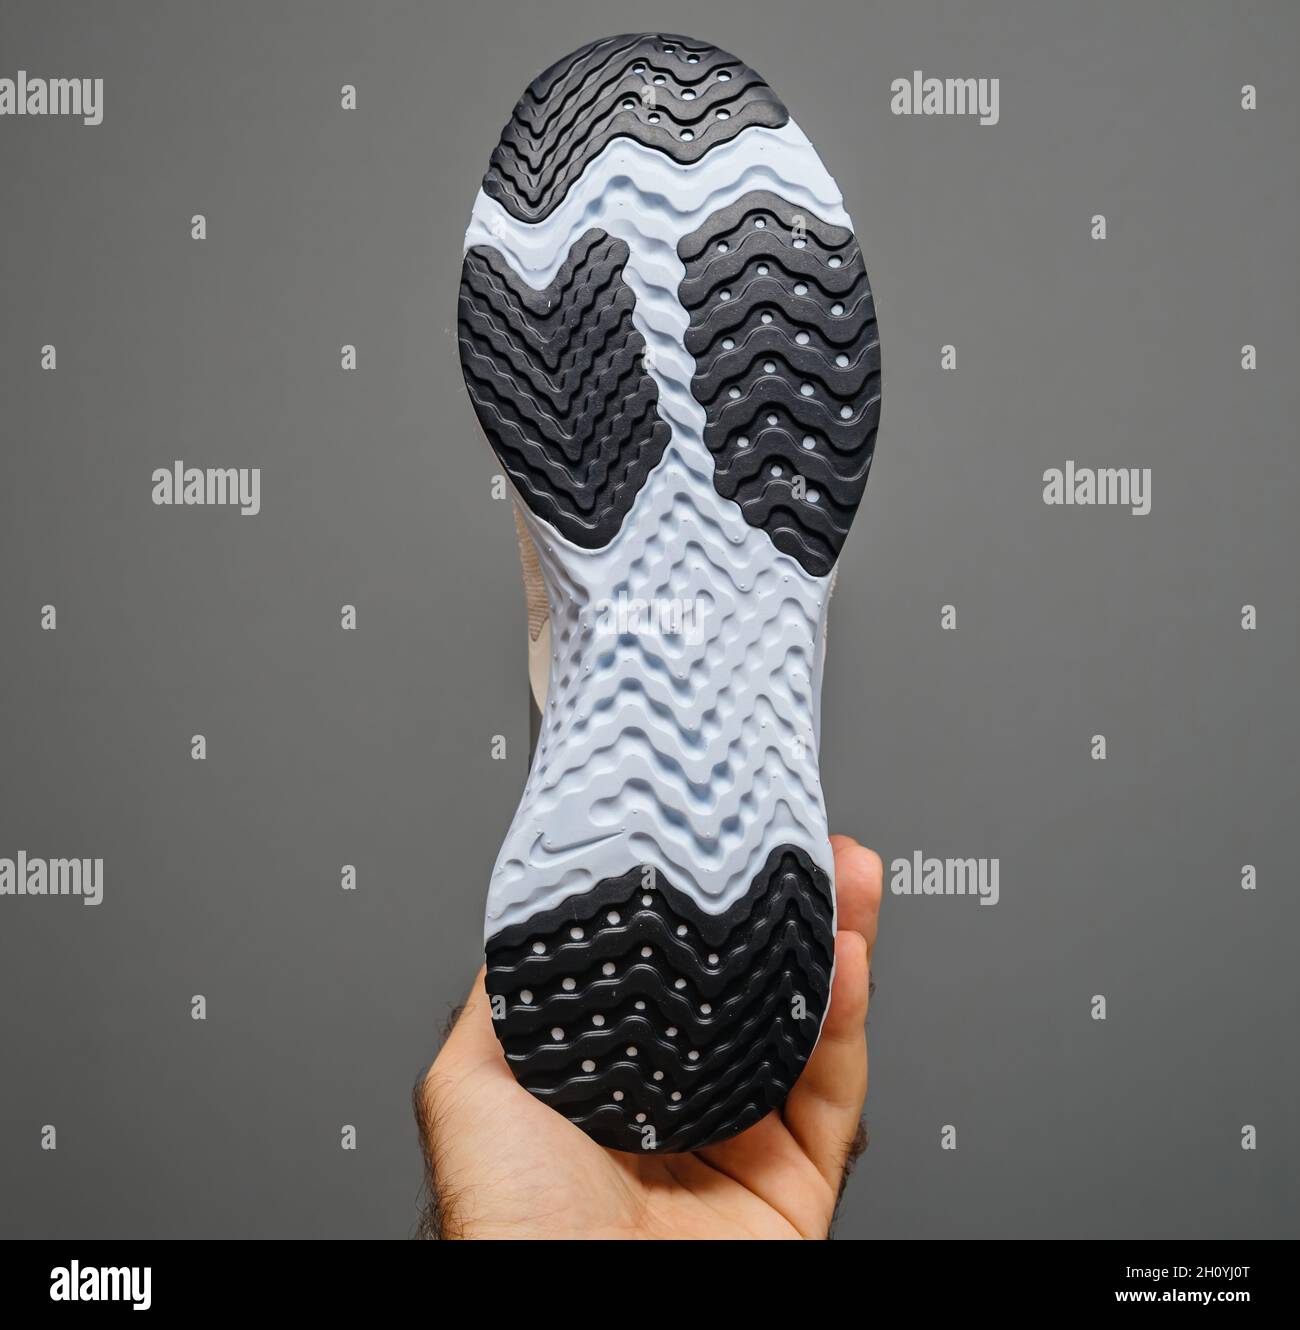 POV male hand holding isolated on gray background new Nike running shoe  with Swoosh logotype Stock Photo - Alamy